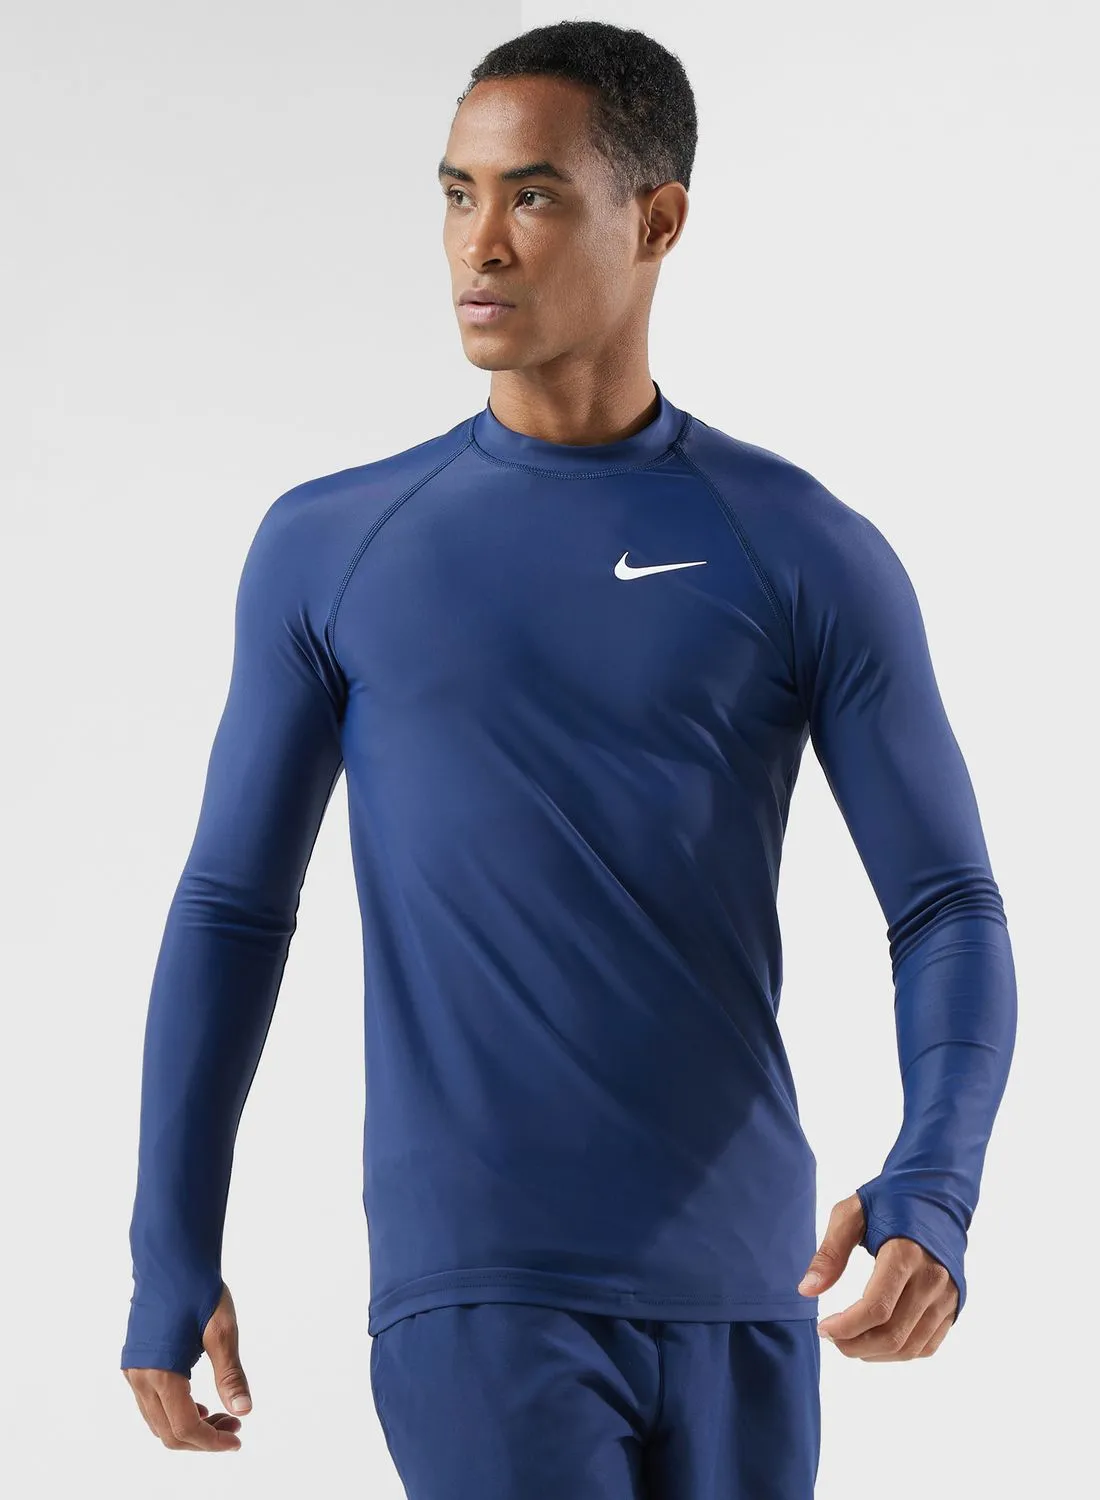 Nike Rashguard Swim Shirt